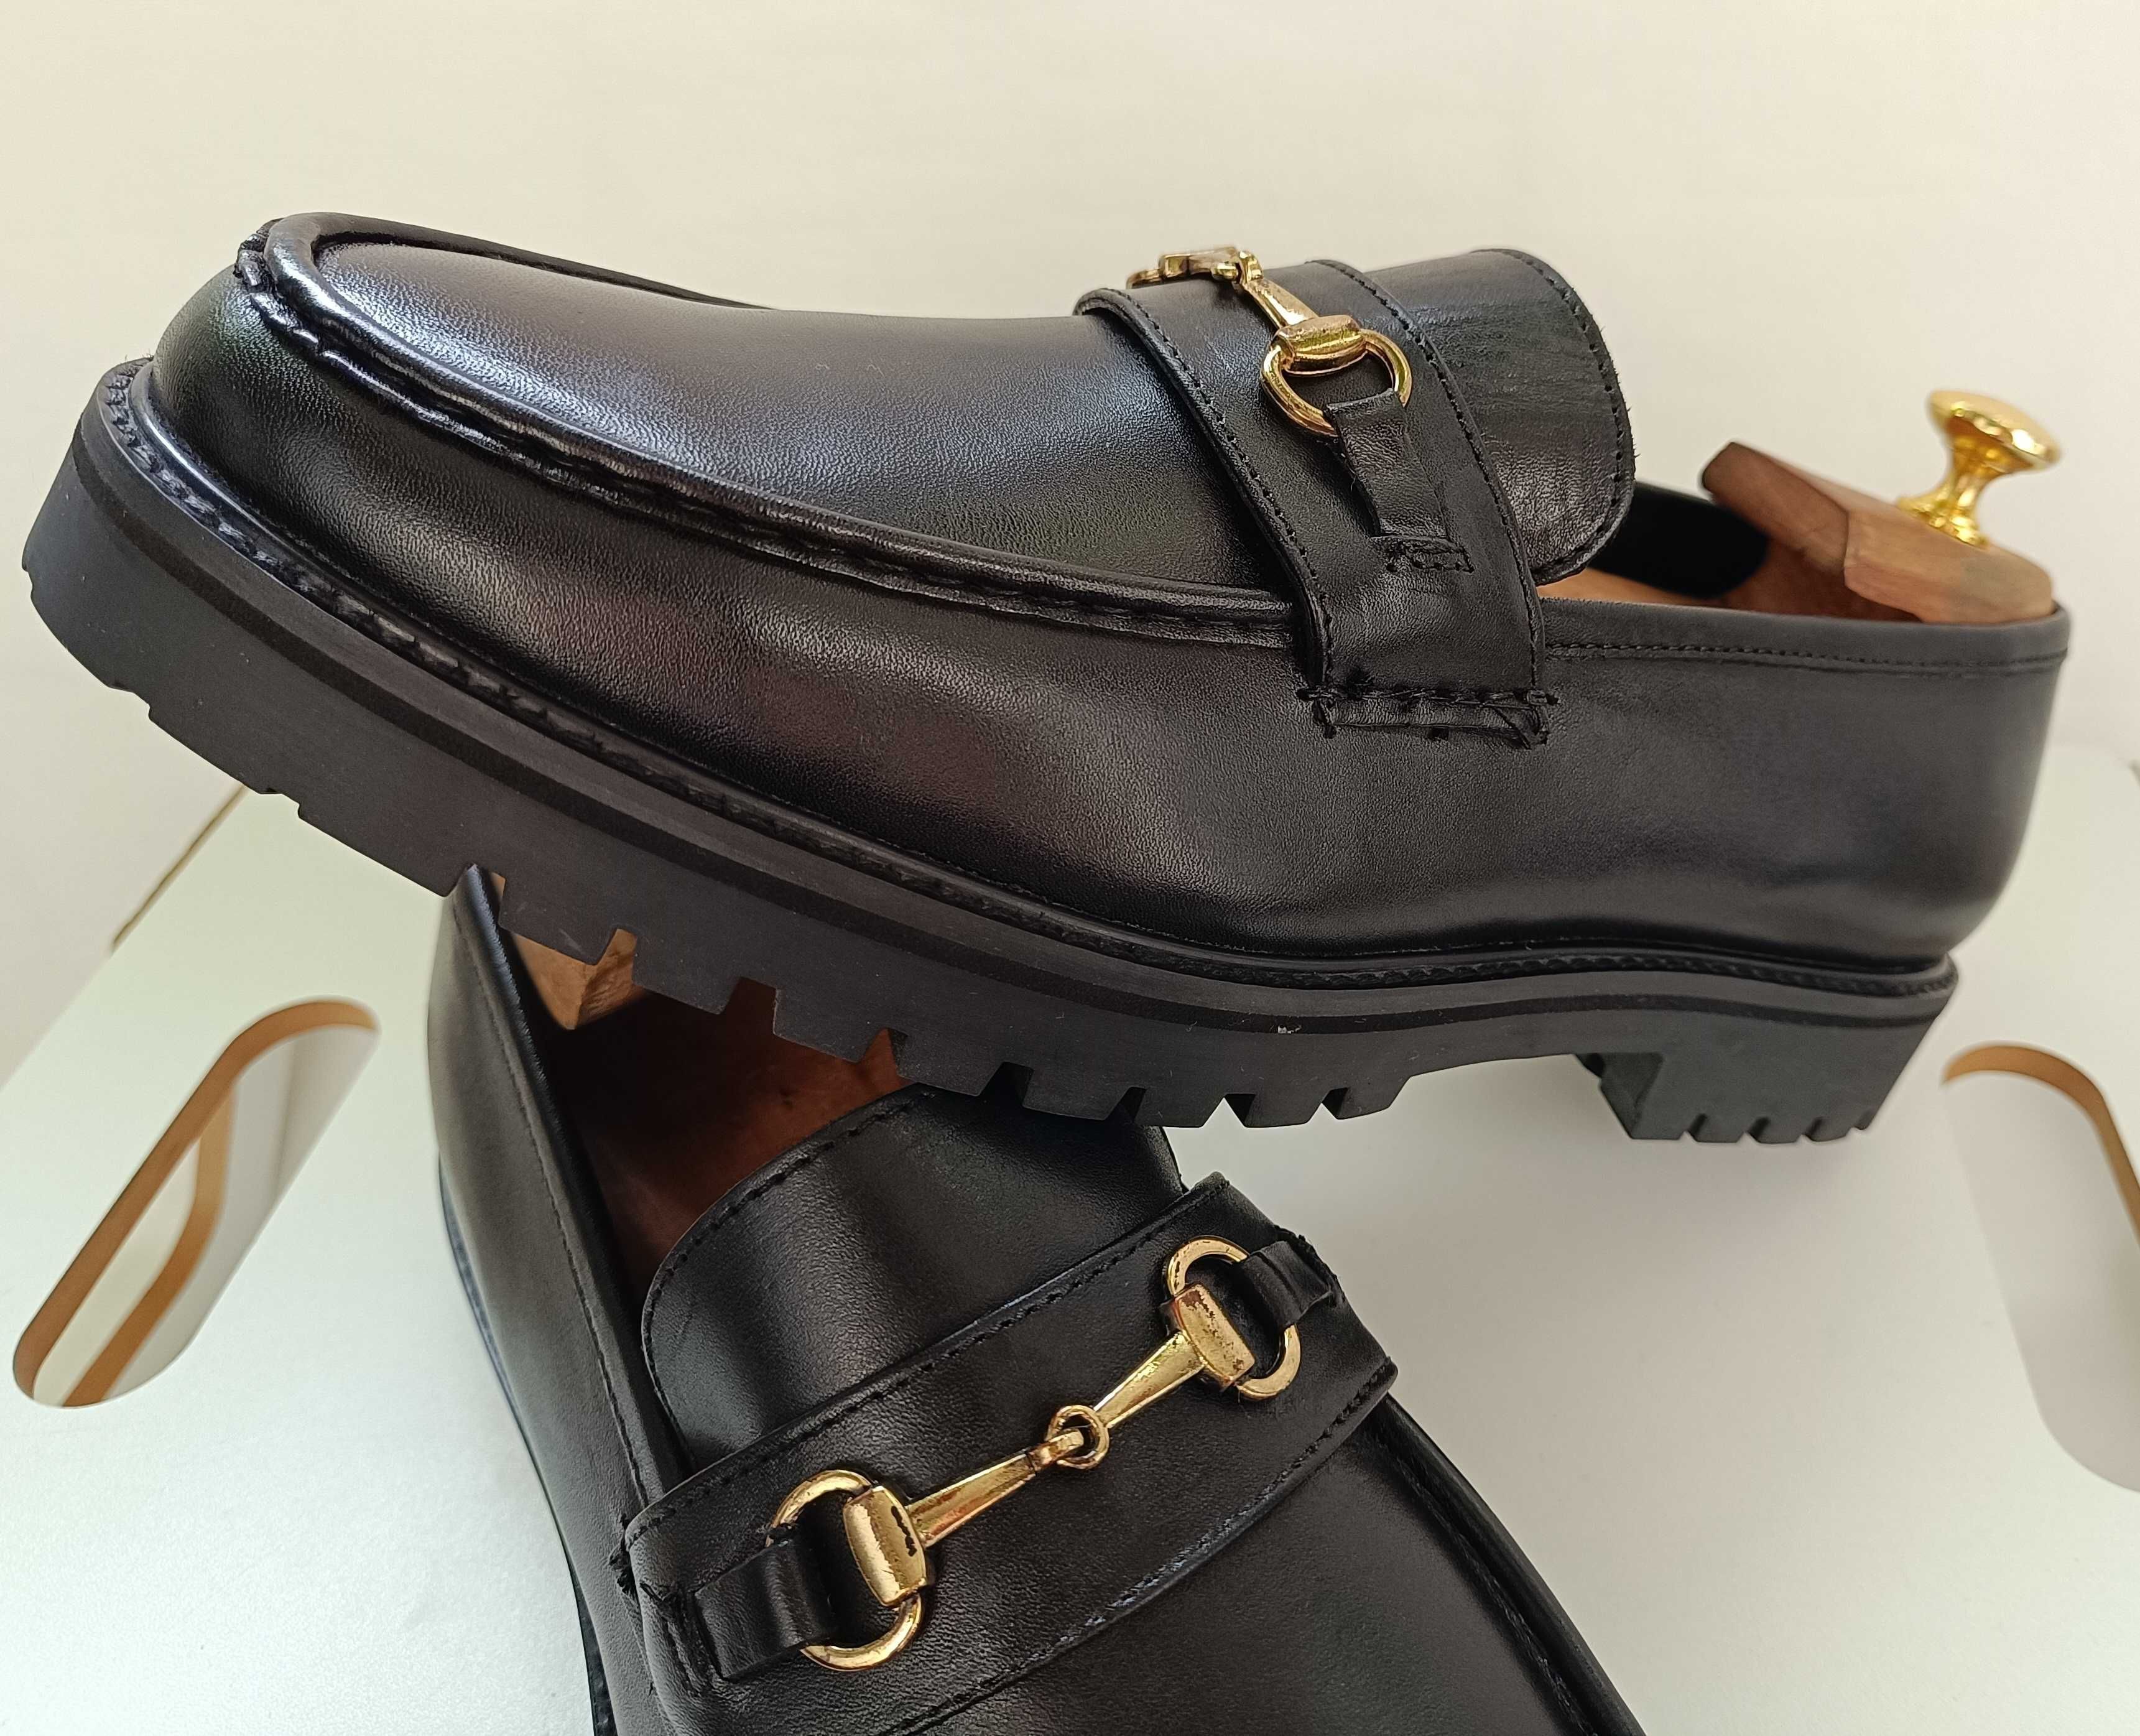 Pantofi loafer 42 bit moc toe ZIGN London NOI piele naturala premium